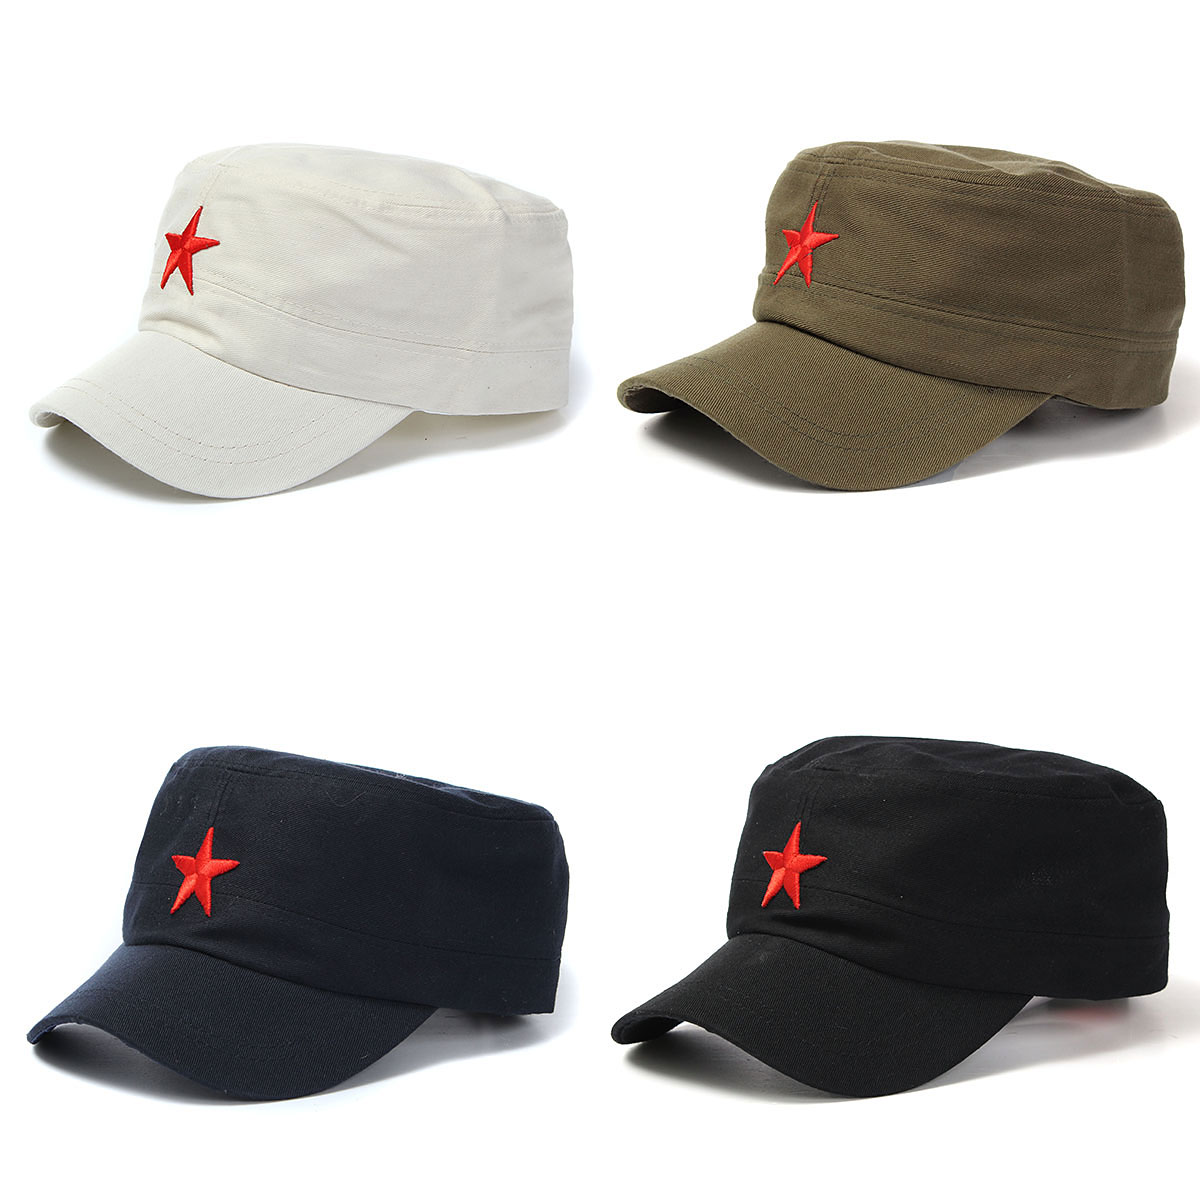 Unisex Red Star Cotton Army Cadet Military Cap Adjustable Hat at Banggood